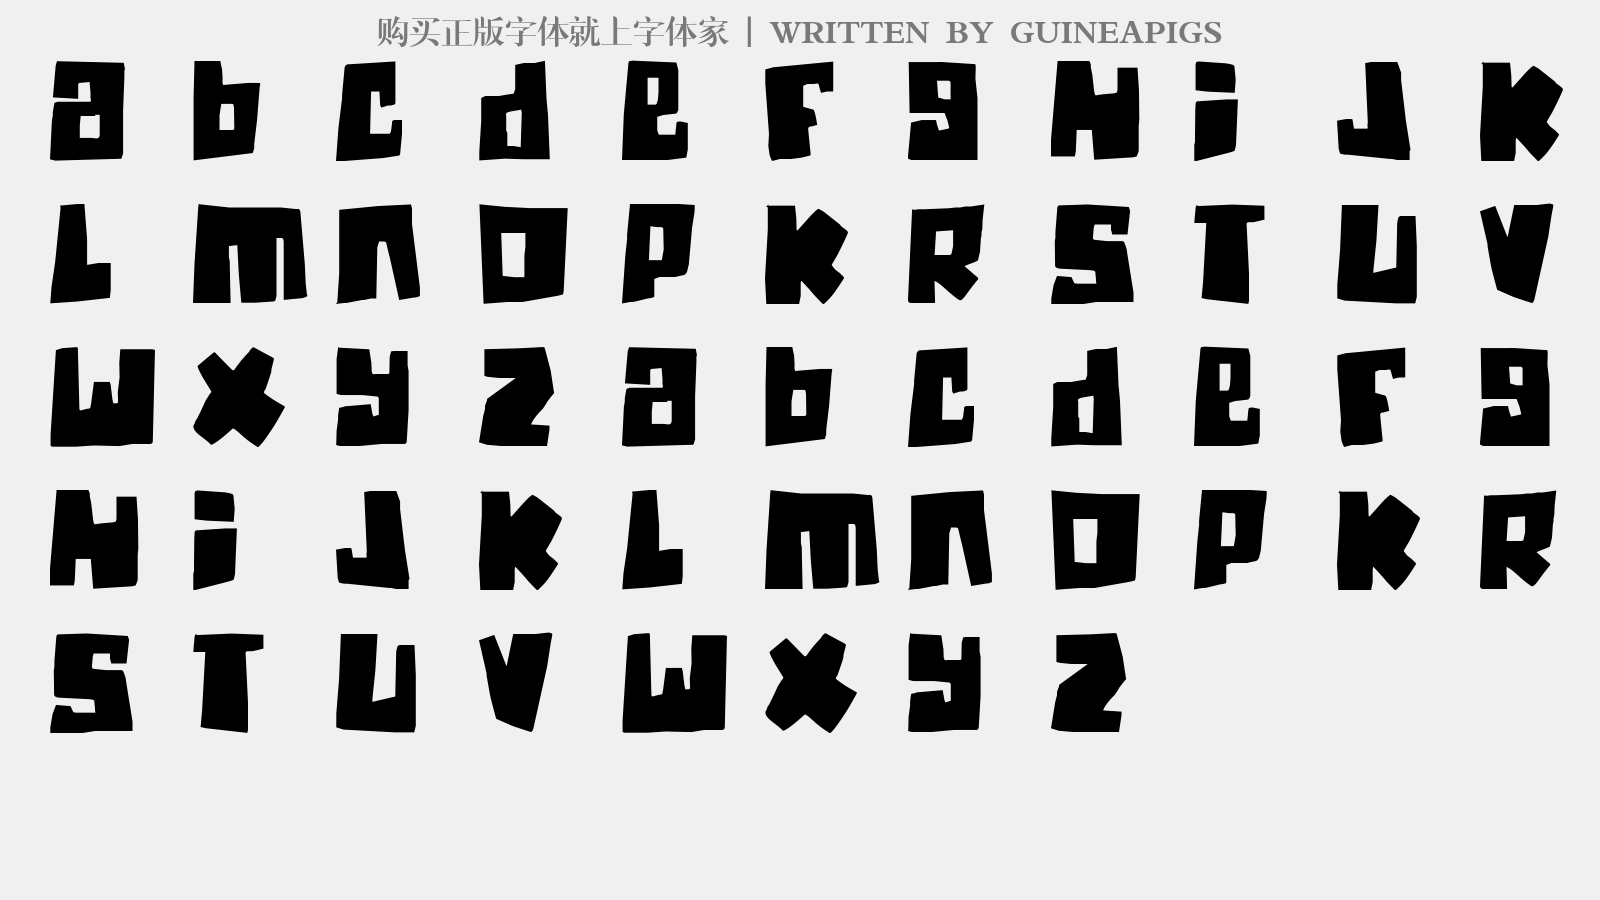 GUINEAPIGS - 大写字母/小写字母/数字